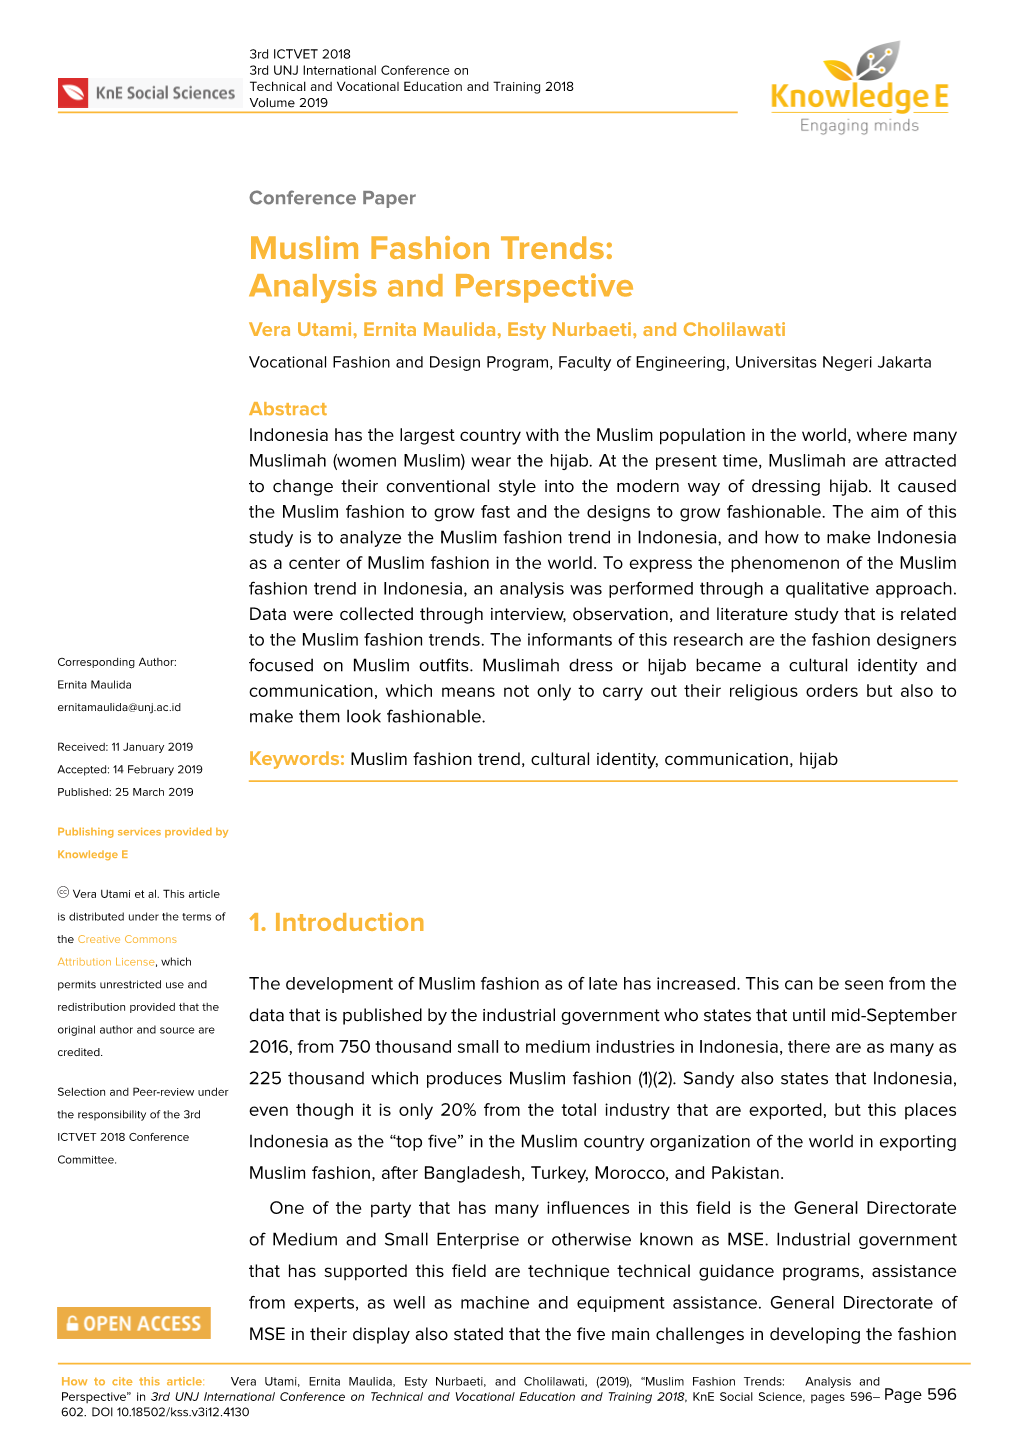 Muslim Fashion Trends